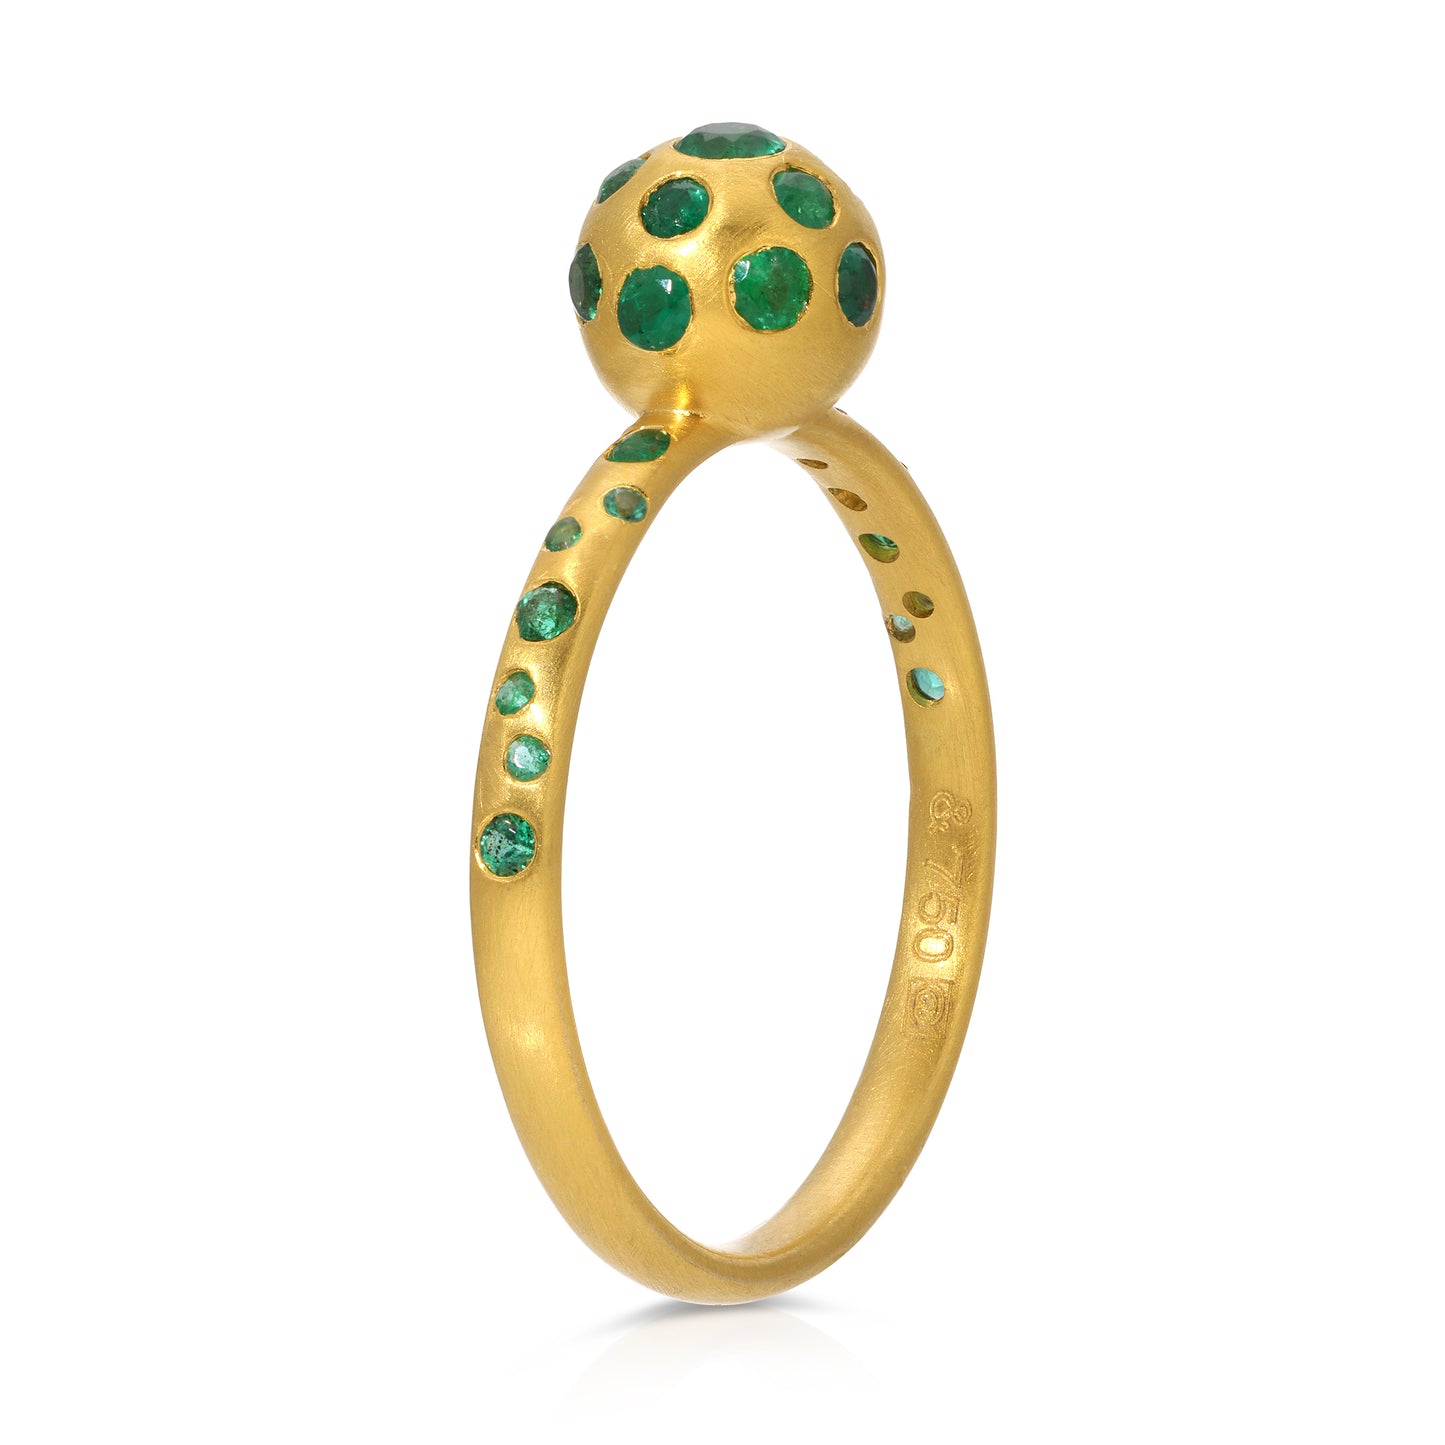 Emerald Swiss Dot Ring